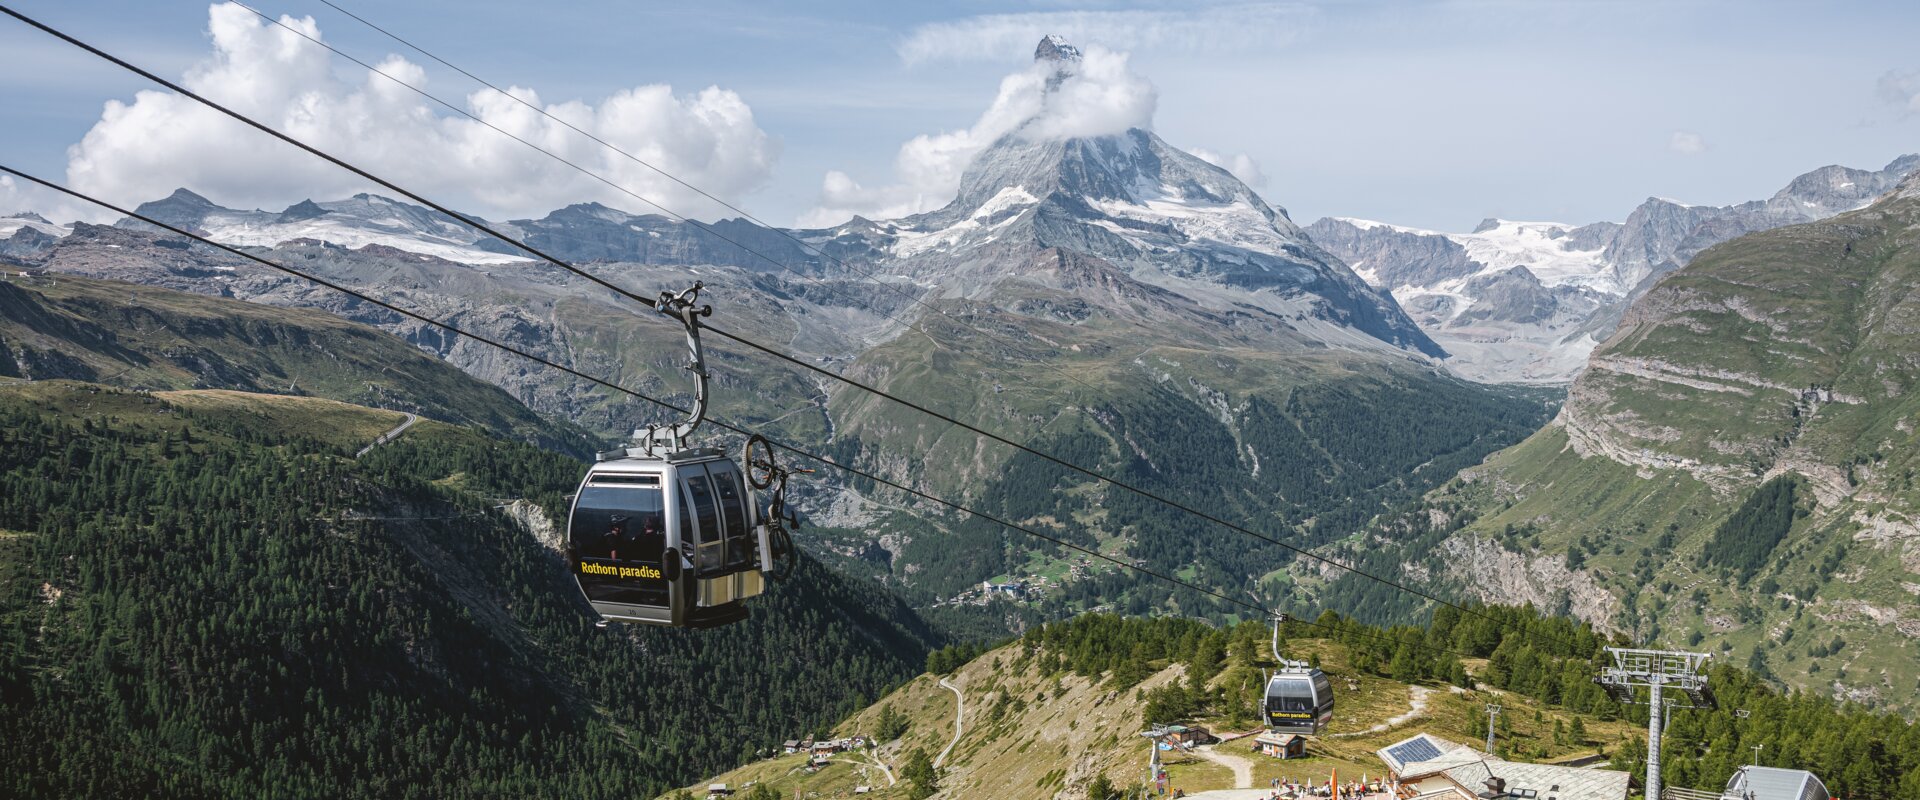 Gondolas in the hiking region of Zermatt in summer | © Christian Pfammatter